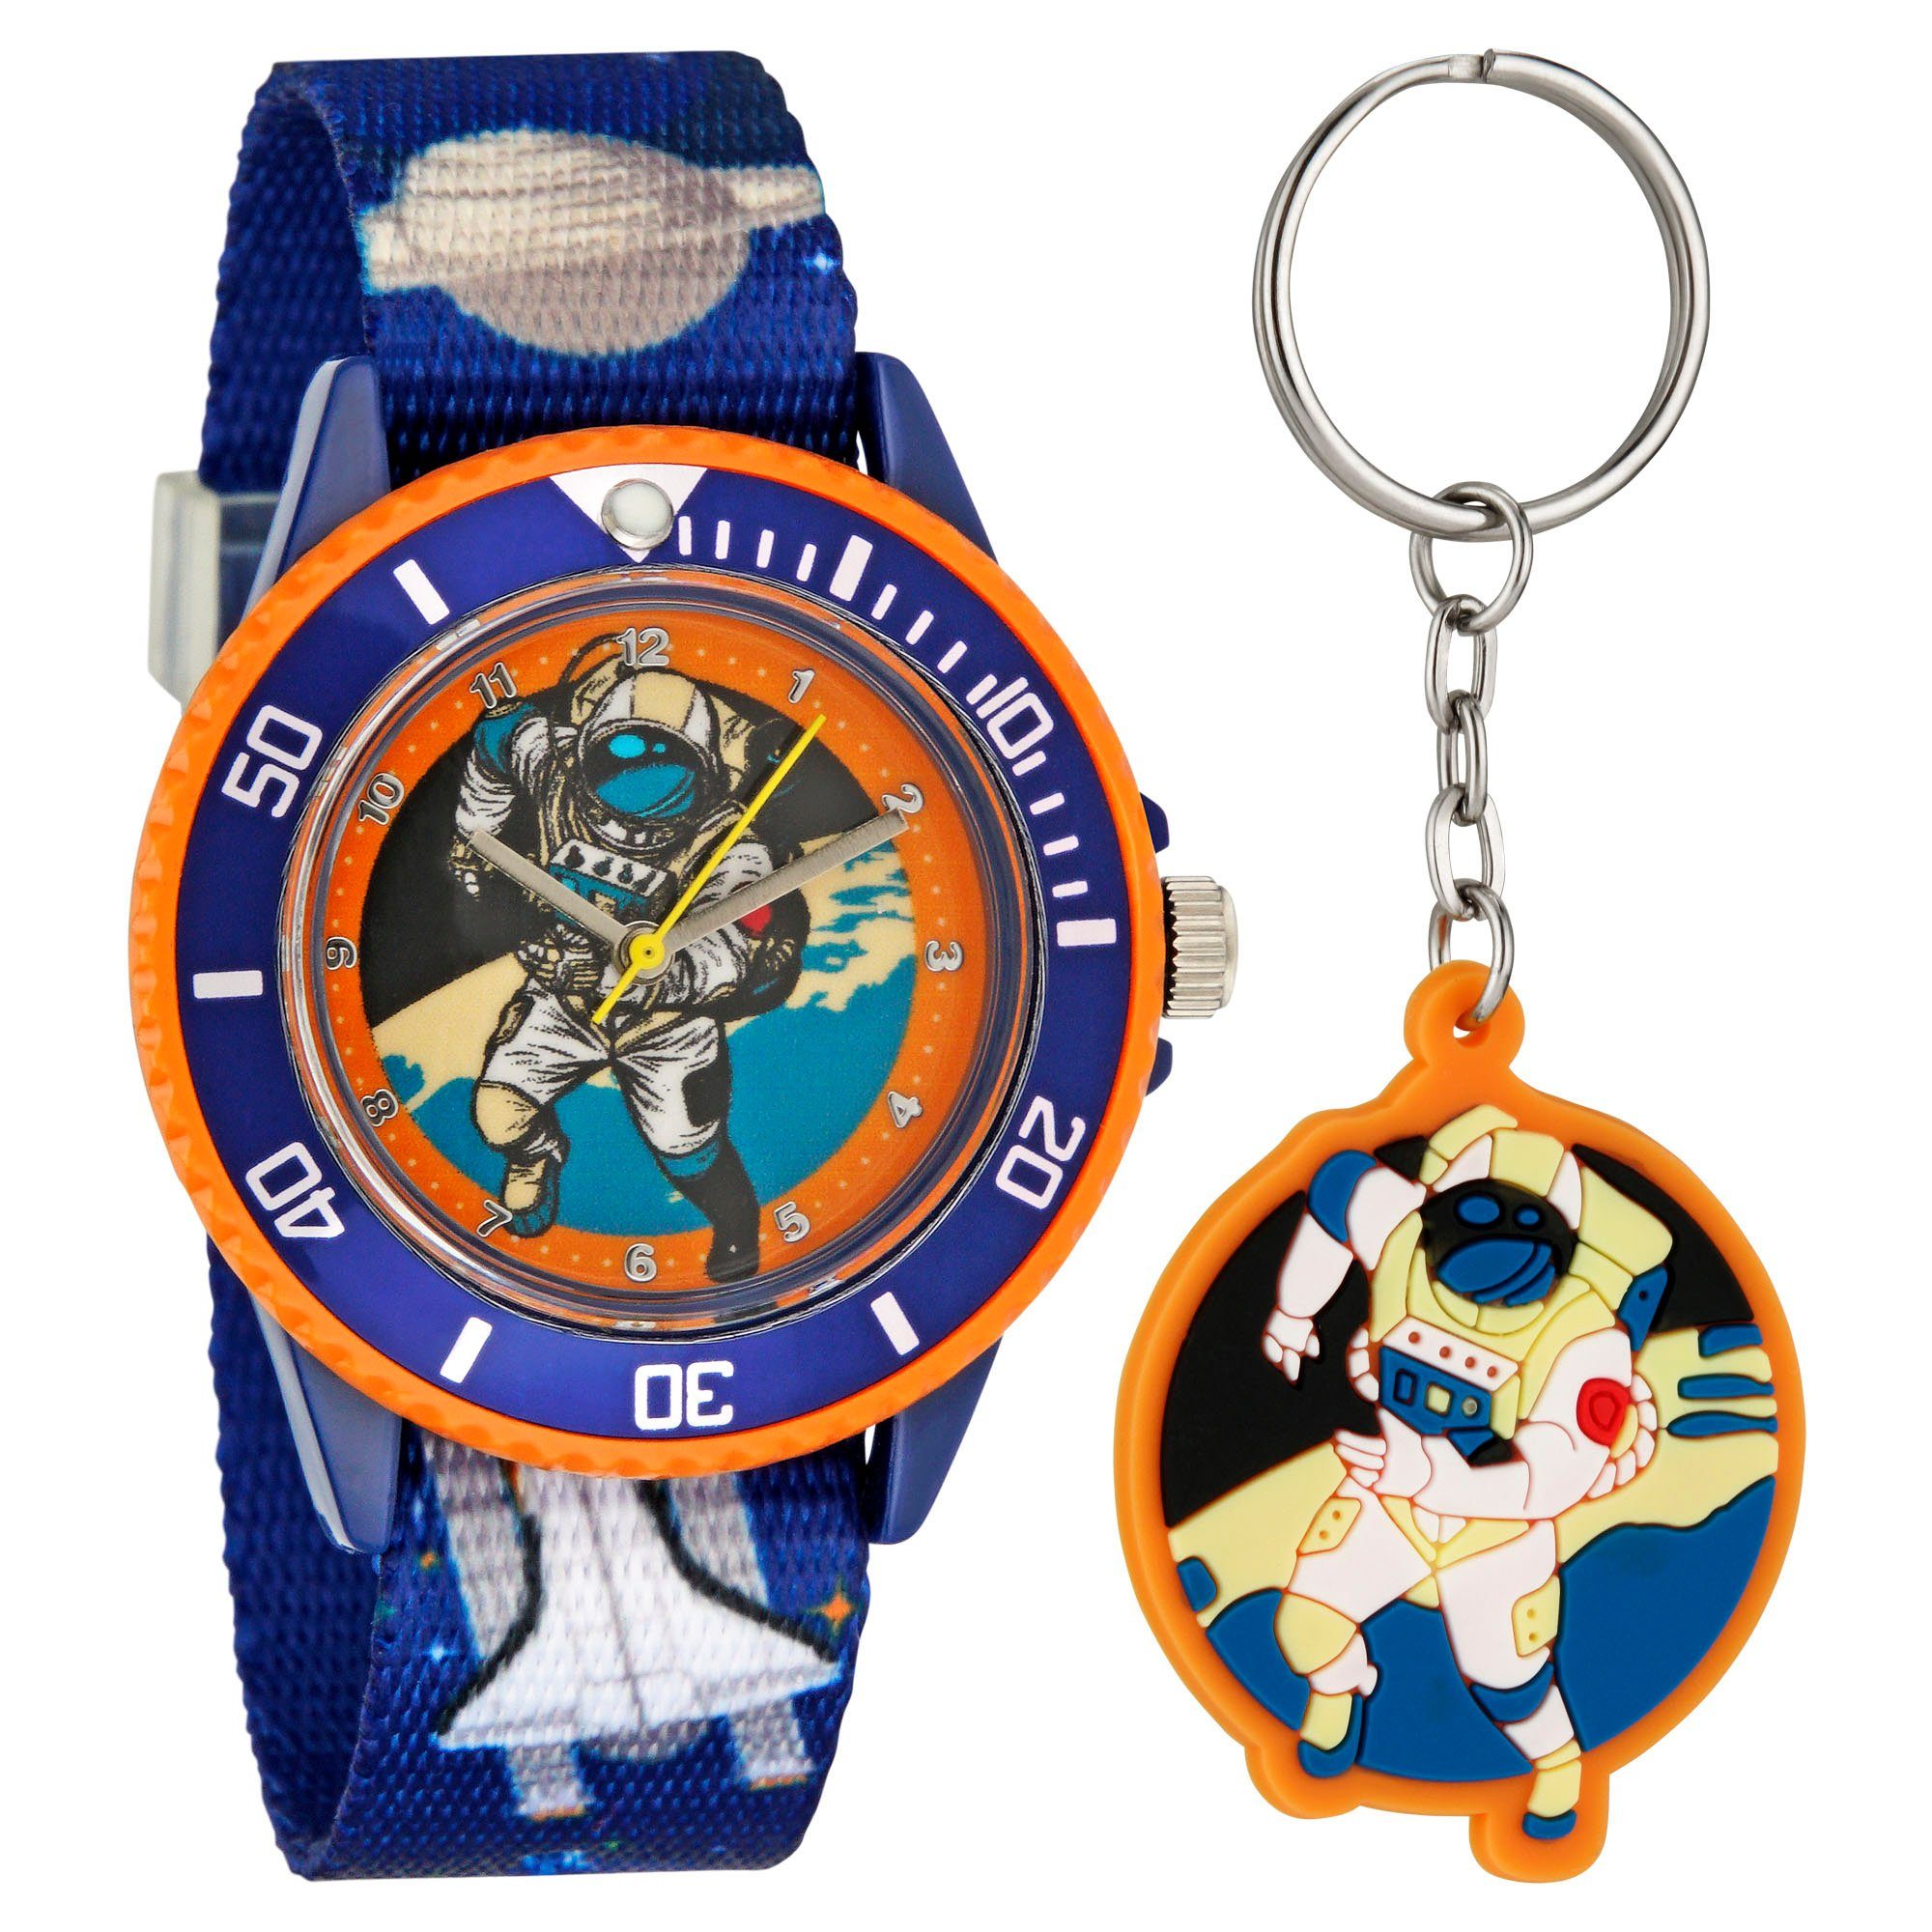 Quarzuhr Kinderarmbanduhr mit Textilarmband und Schlüsselanhänger, Mit Schlüsselanhänger Blau